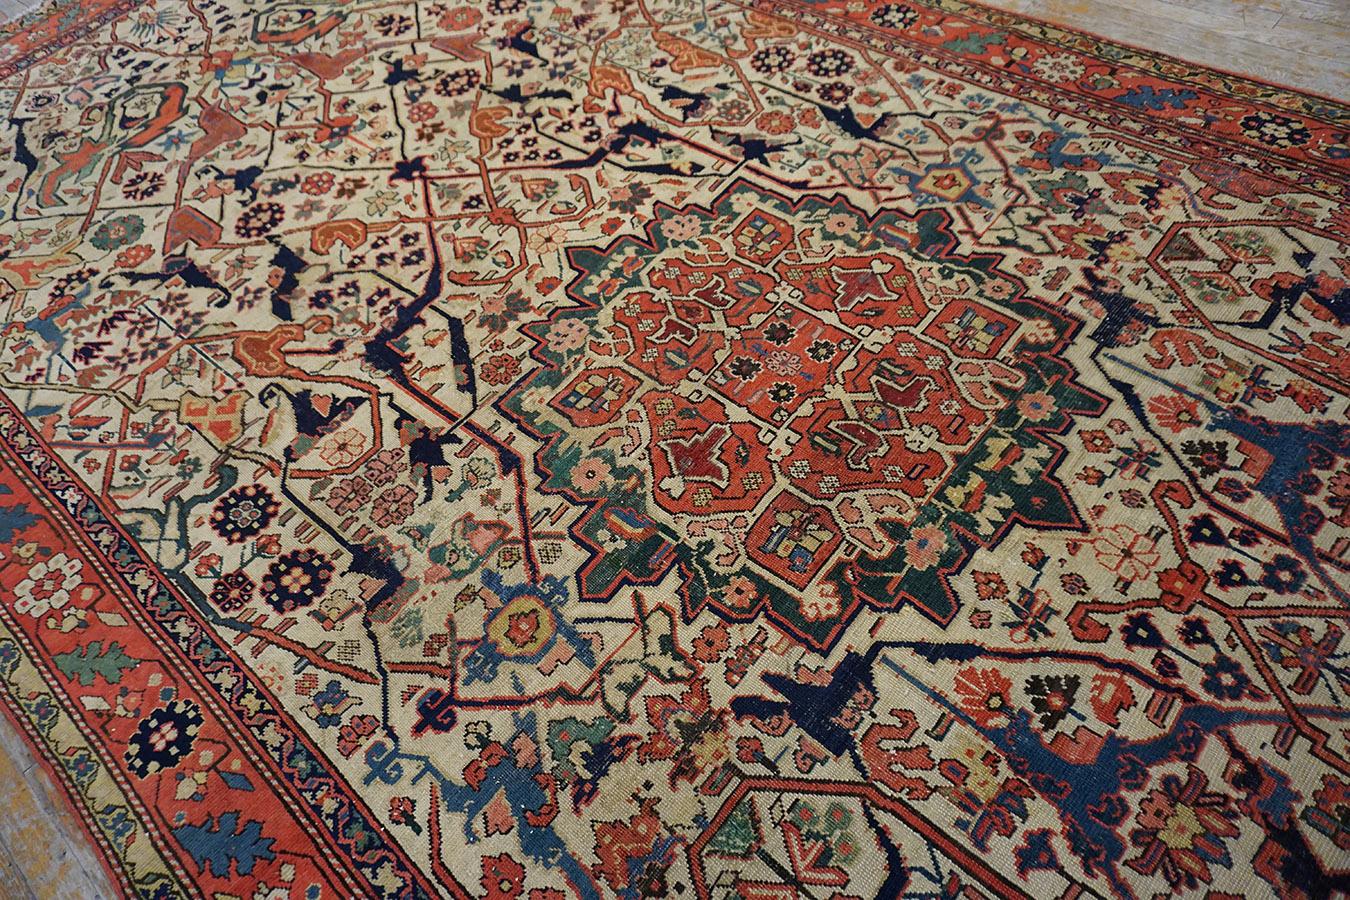 19th Century Caucasian Karabagh Gallery Carpet Dated 1834
7' x 15'9